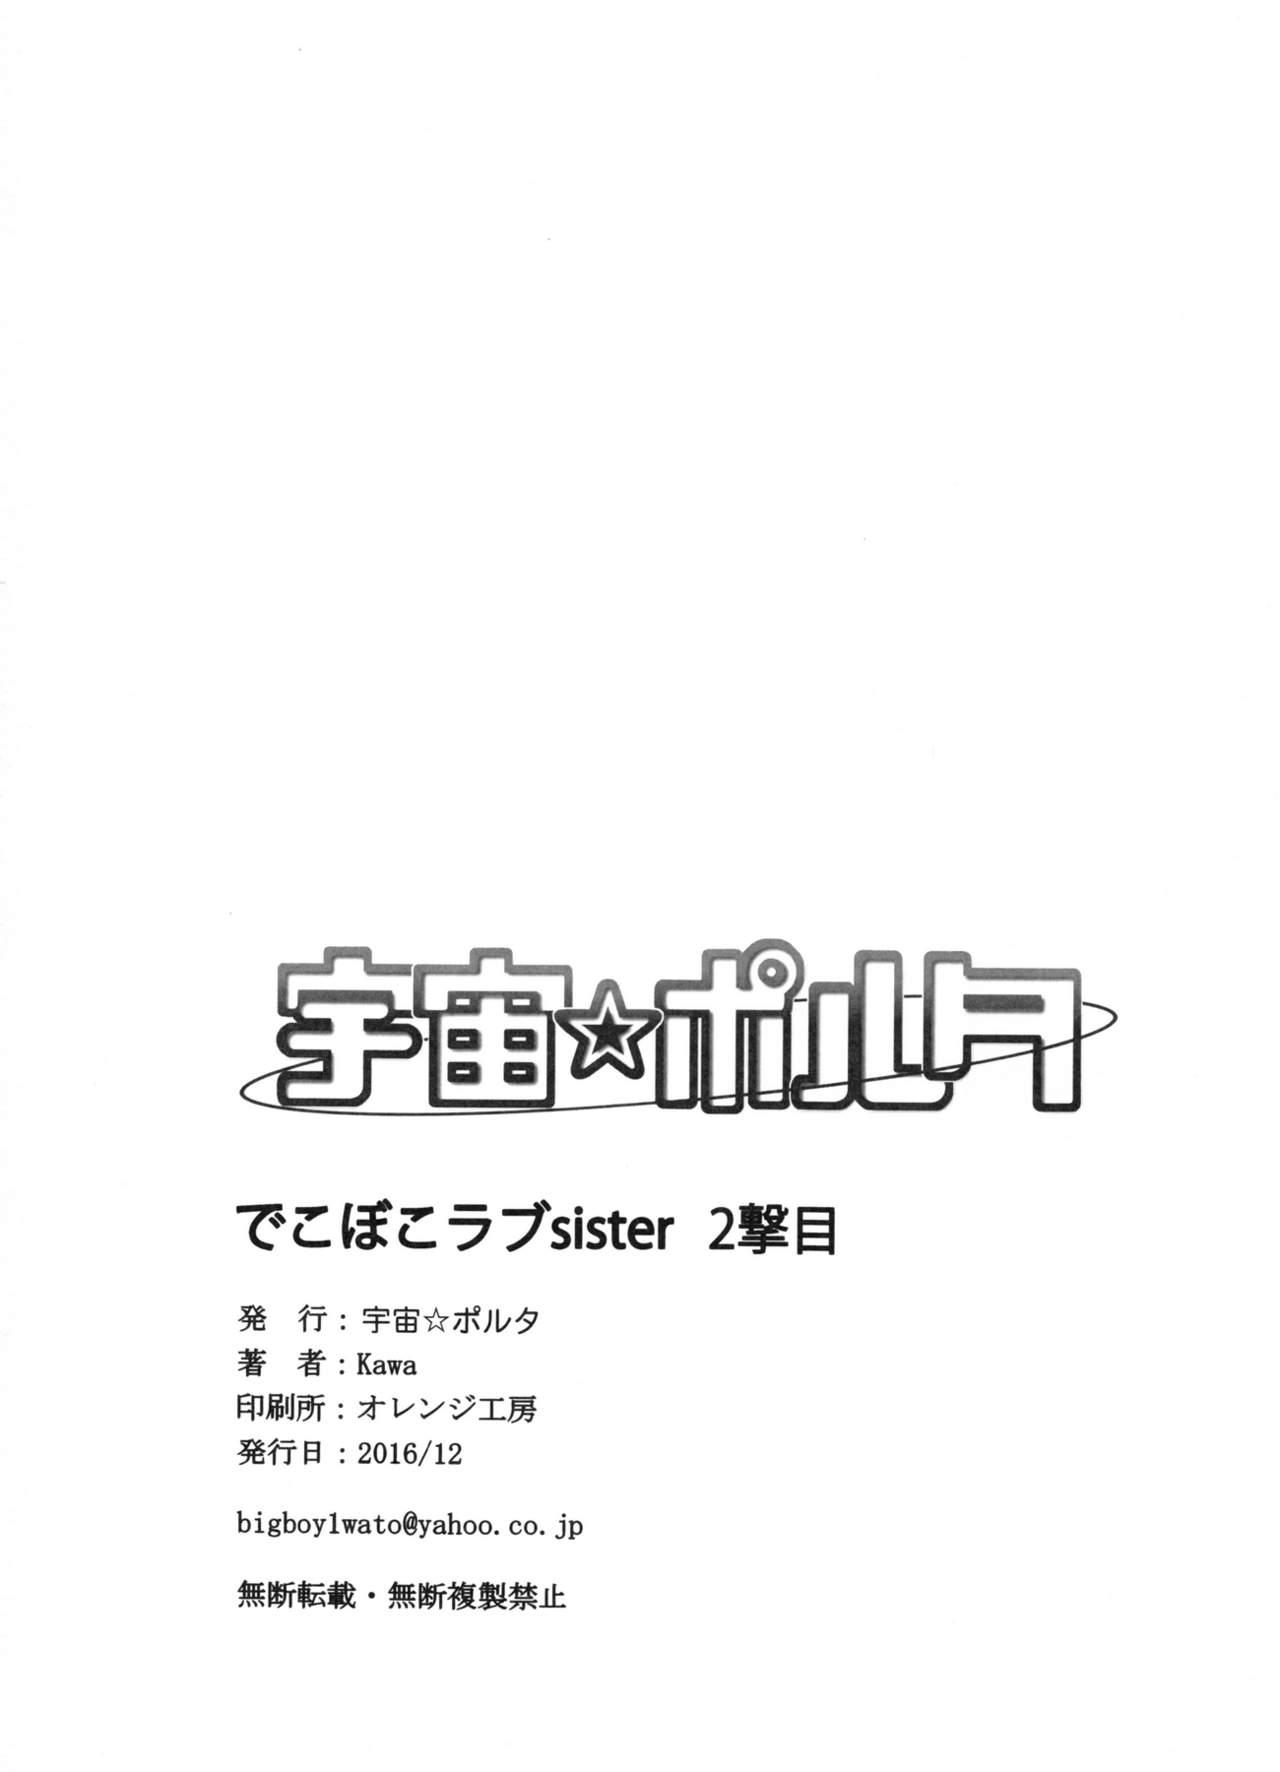 Dekoboko Love Sister 2-gekime! 24